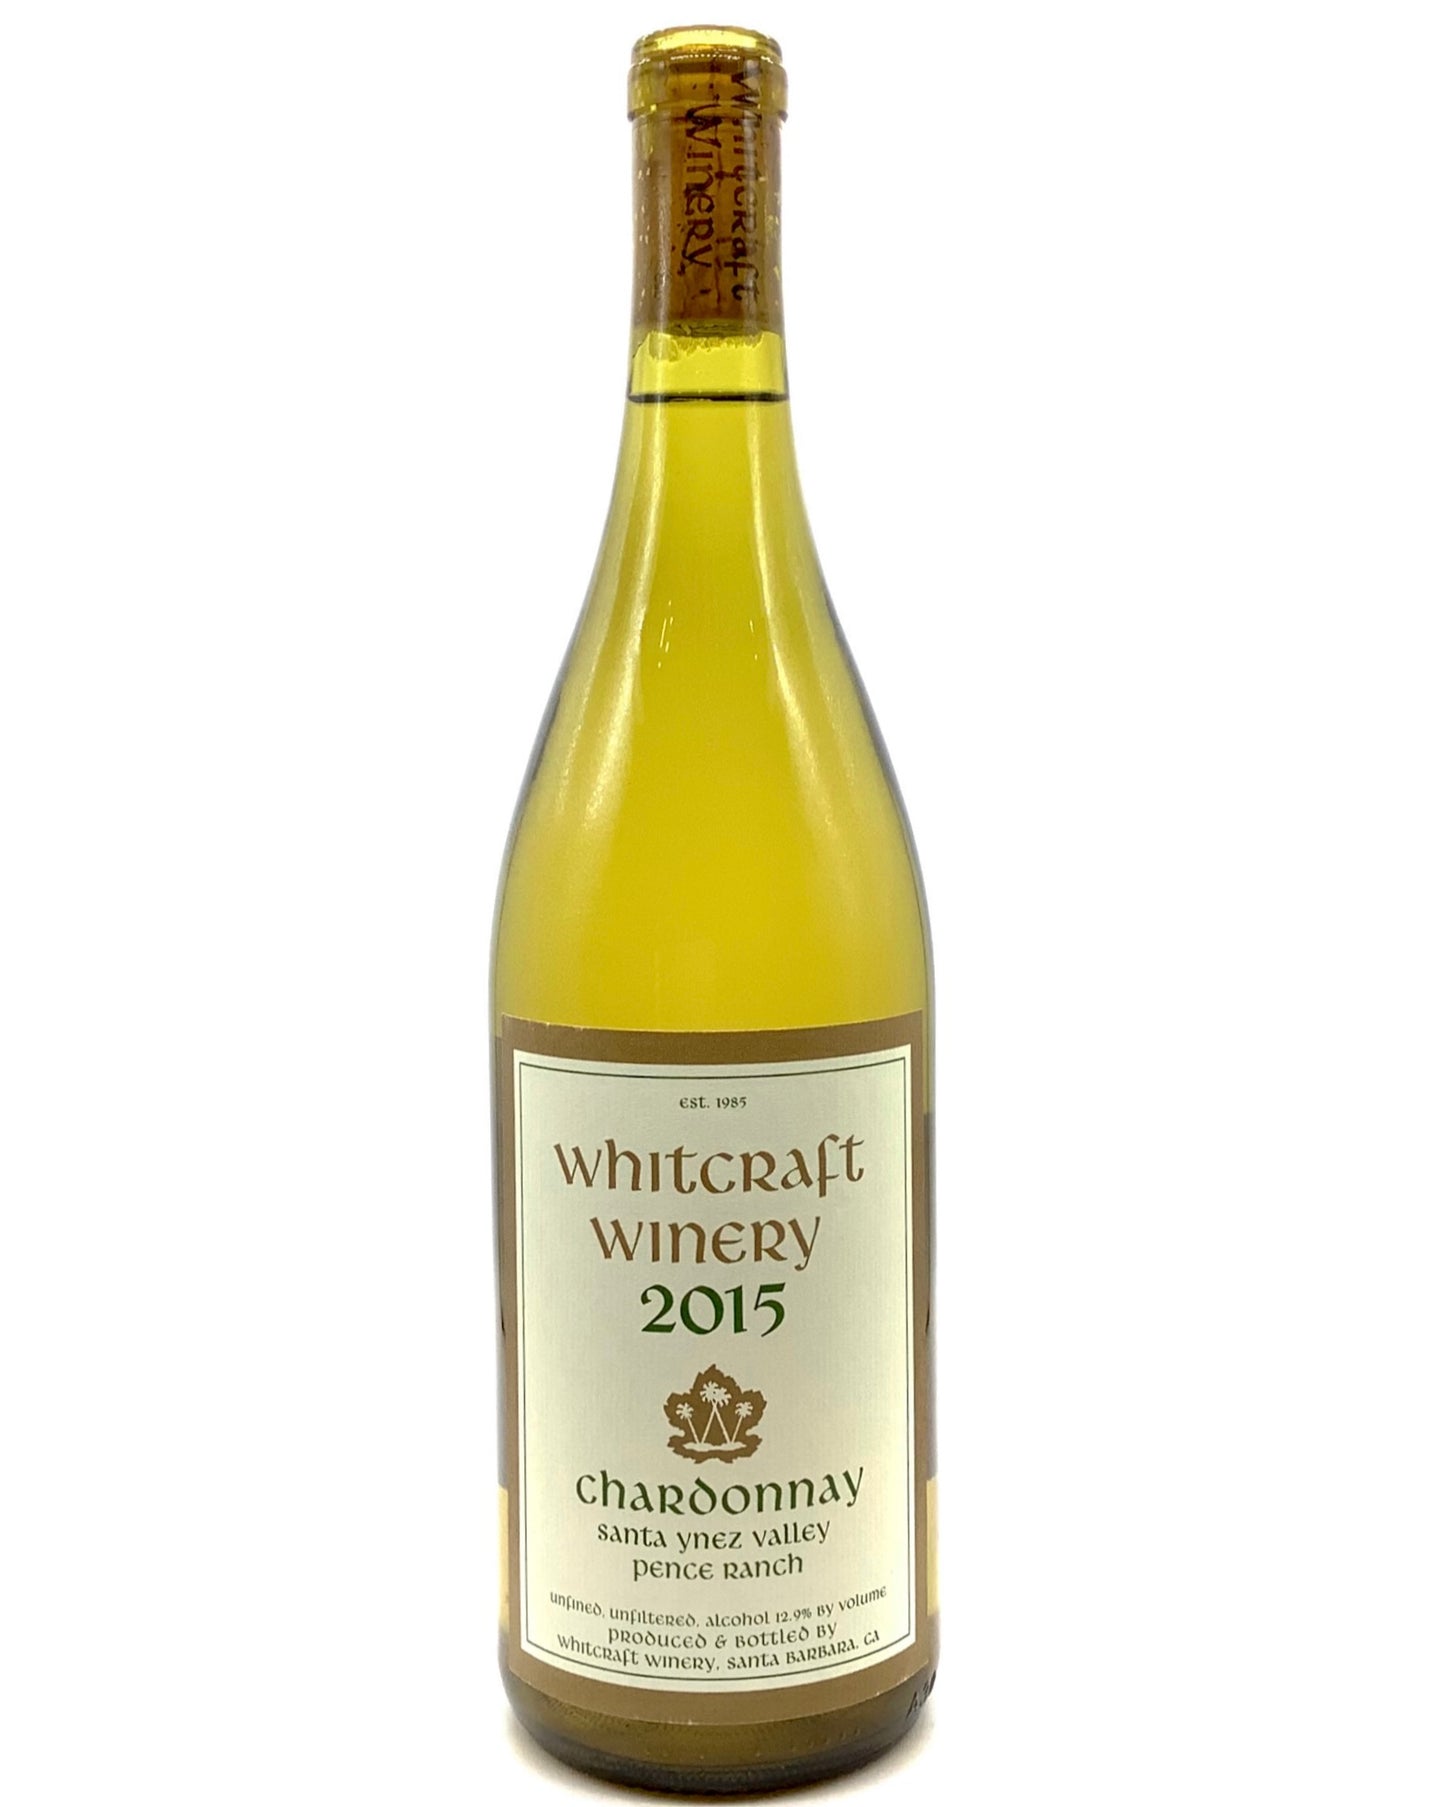 Whitcraft Winery, Chardonnay, Pence Ranch, Santa Ynez Valley, California 2015